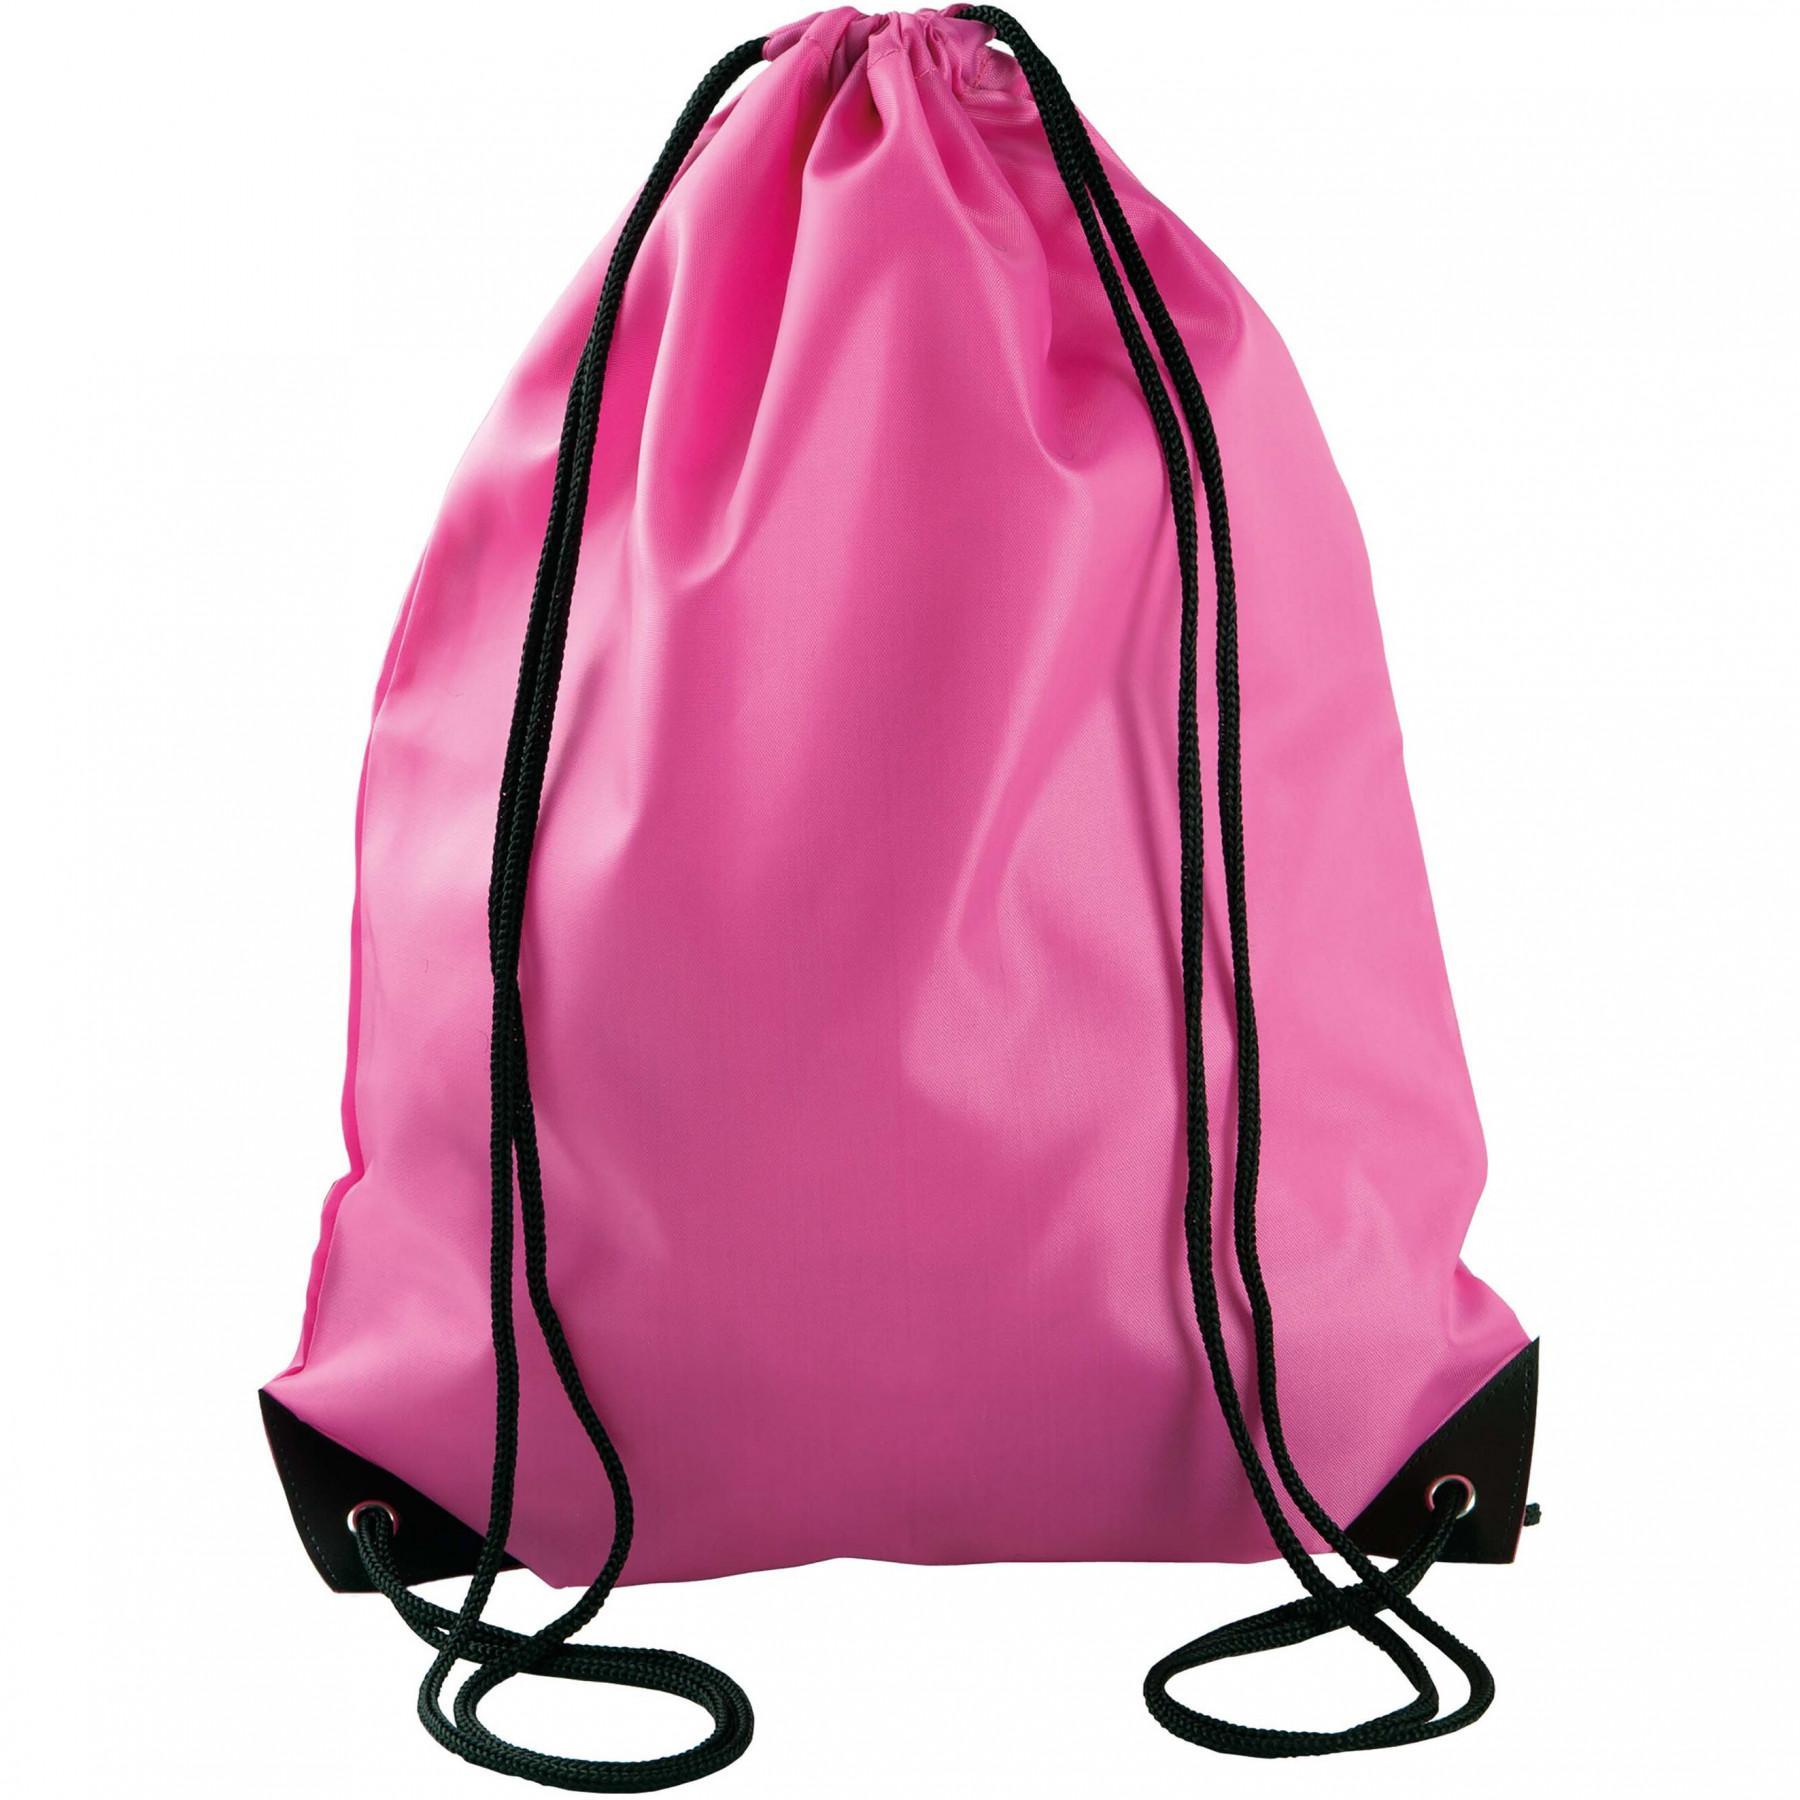 Backpack Kimood